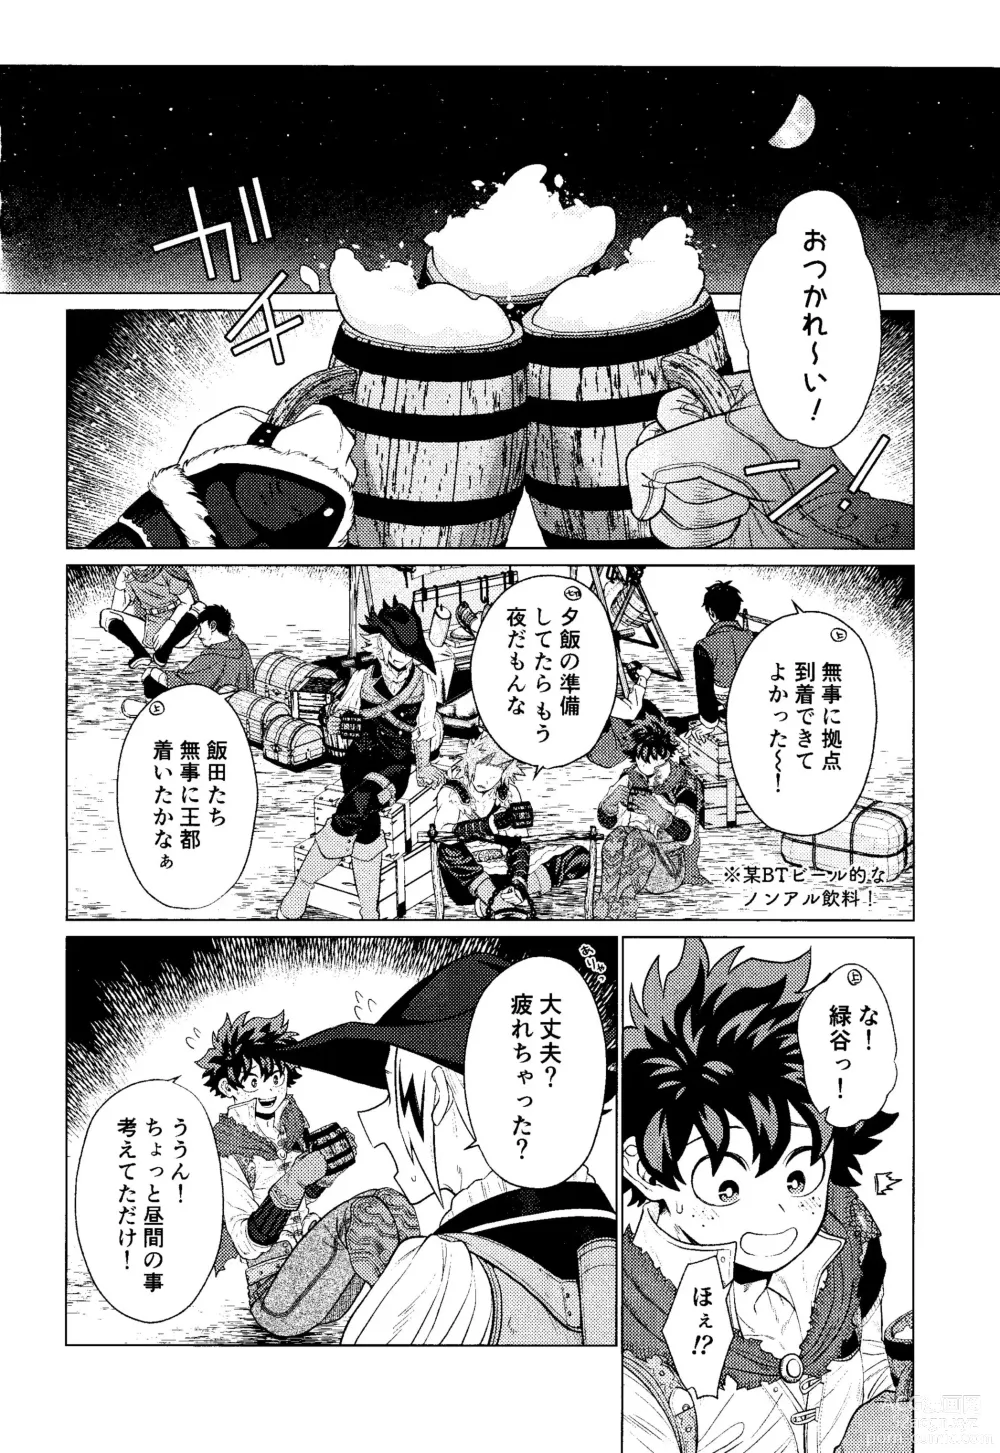 Page 15 of doujinshi Ubatte Nusumareru - Robbed and stolen